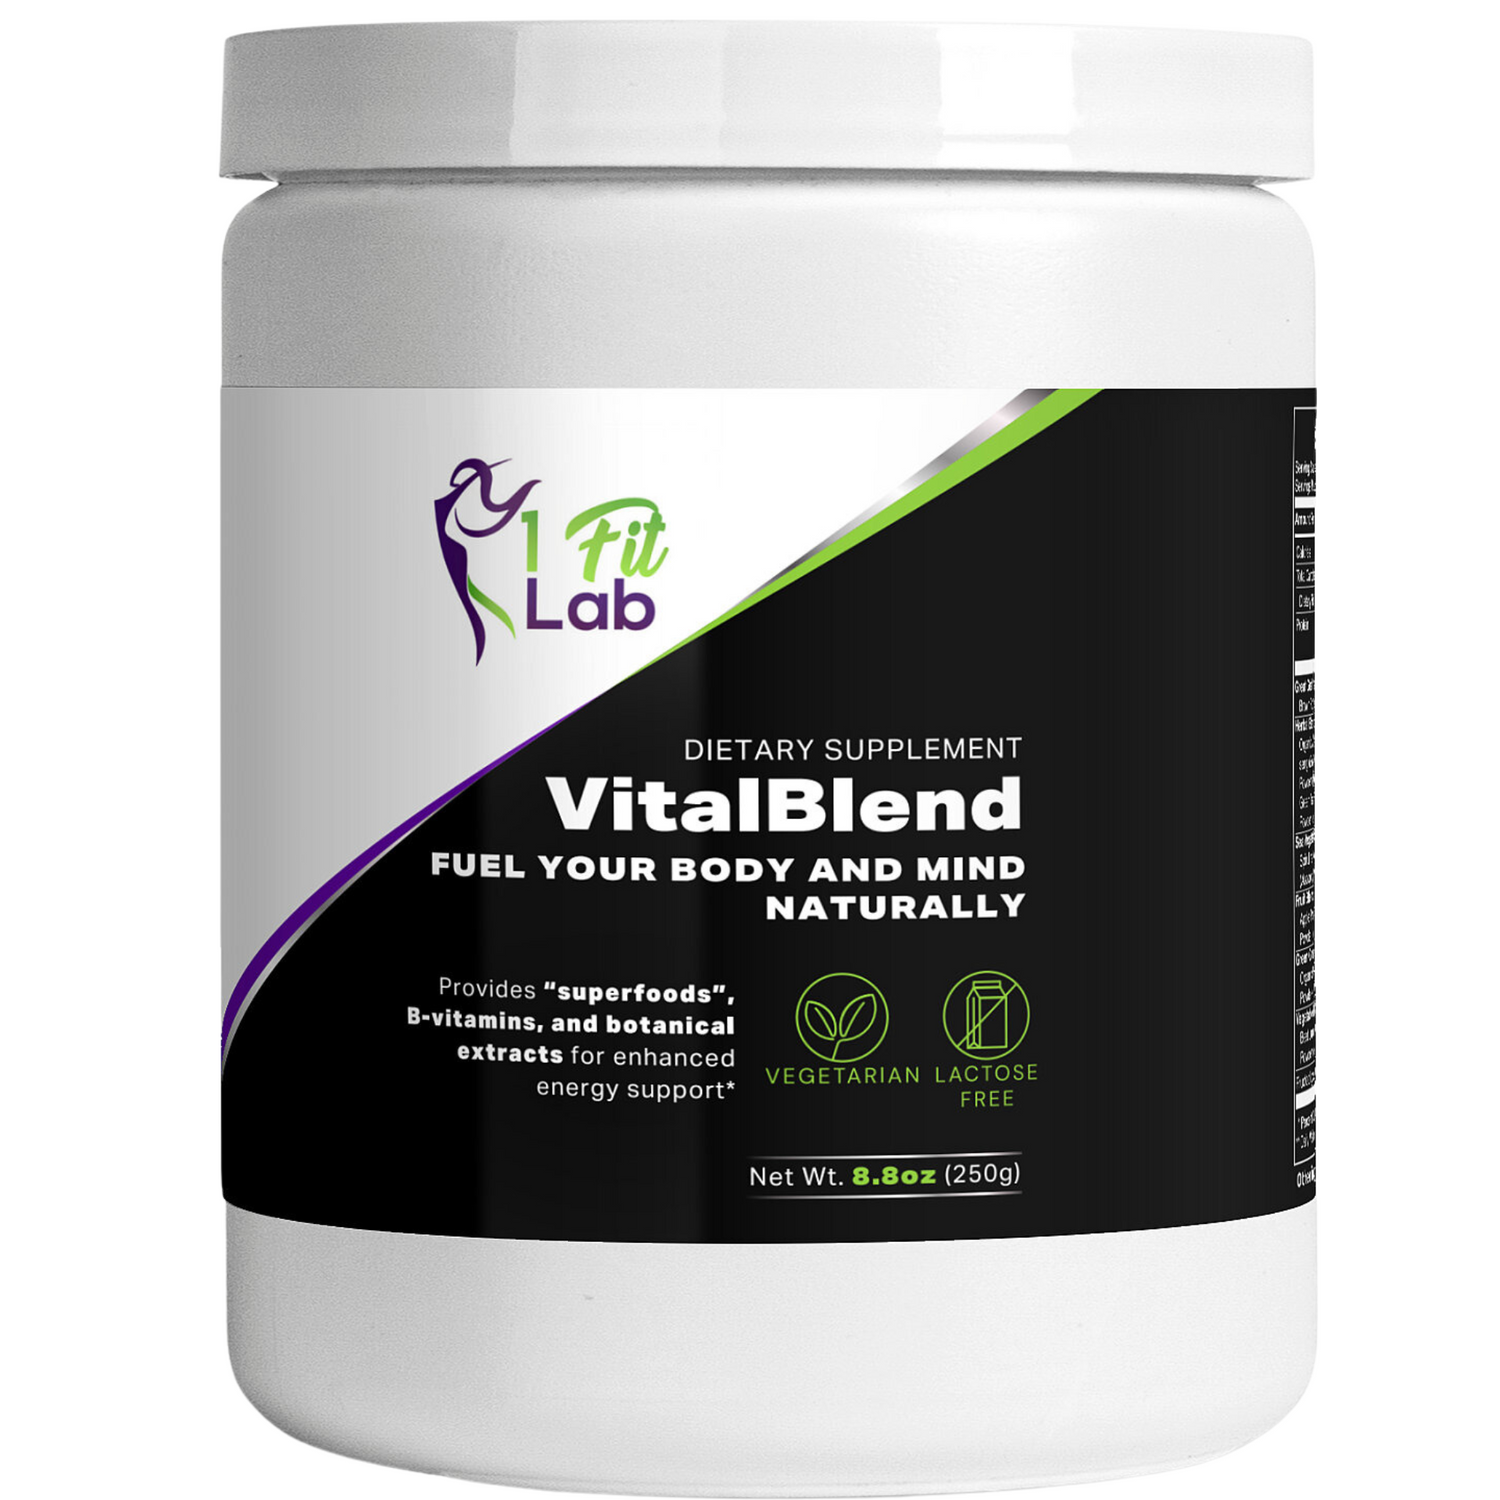 Bottle of VitalBlend Greens Organic Superfood Powder for energy and wellness